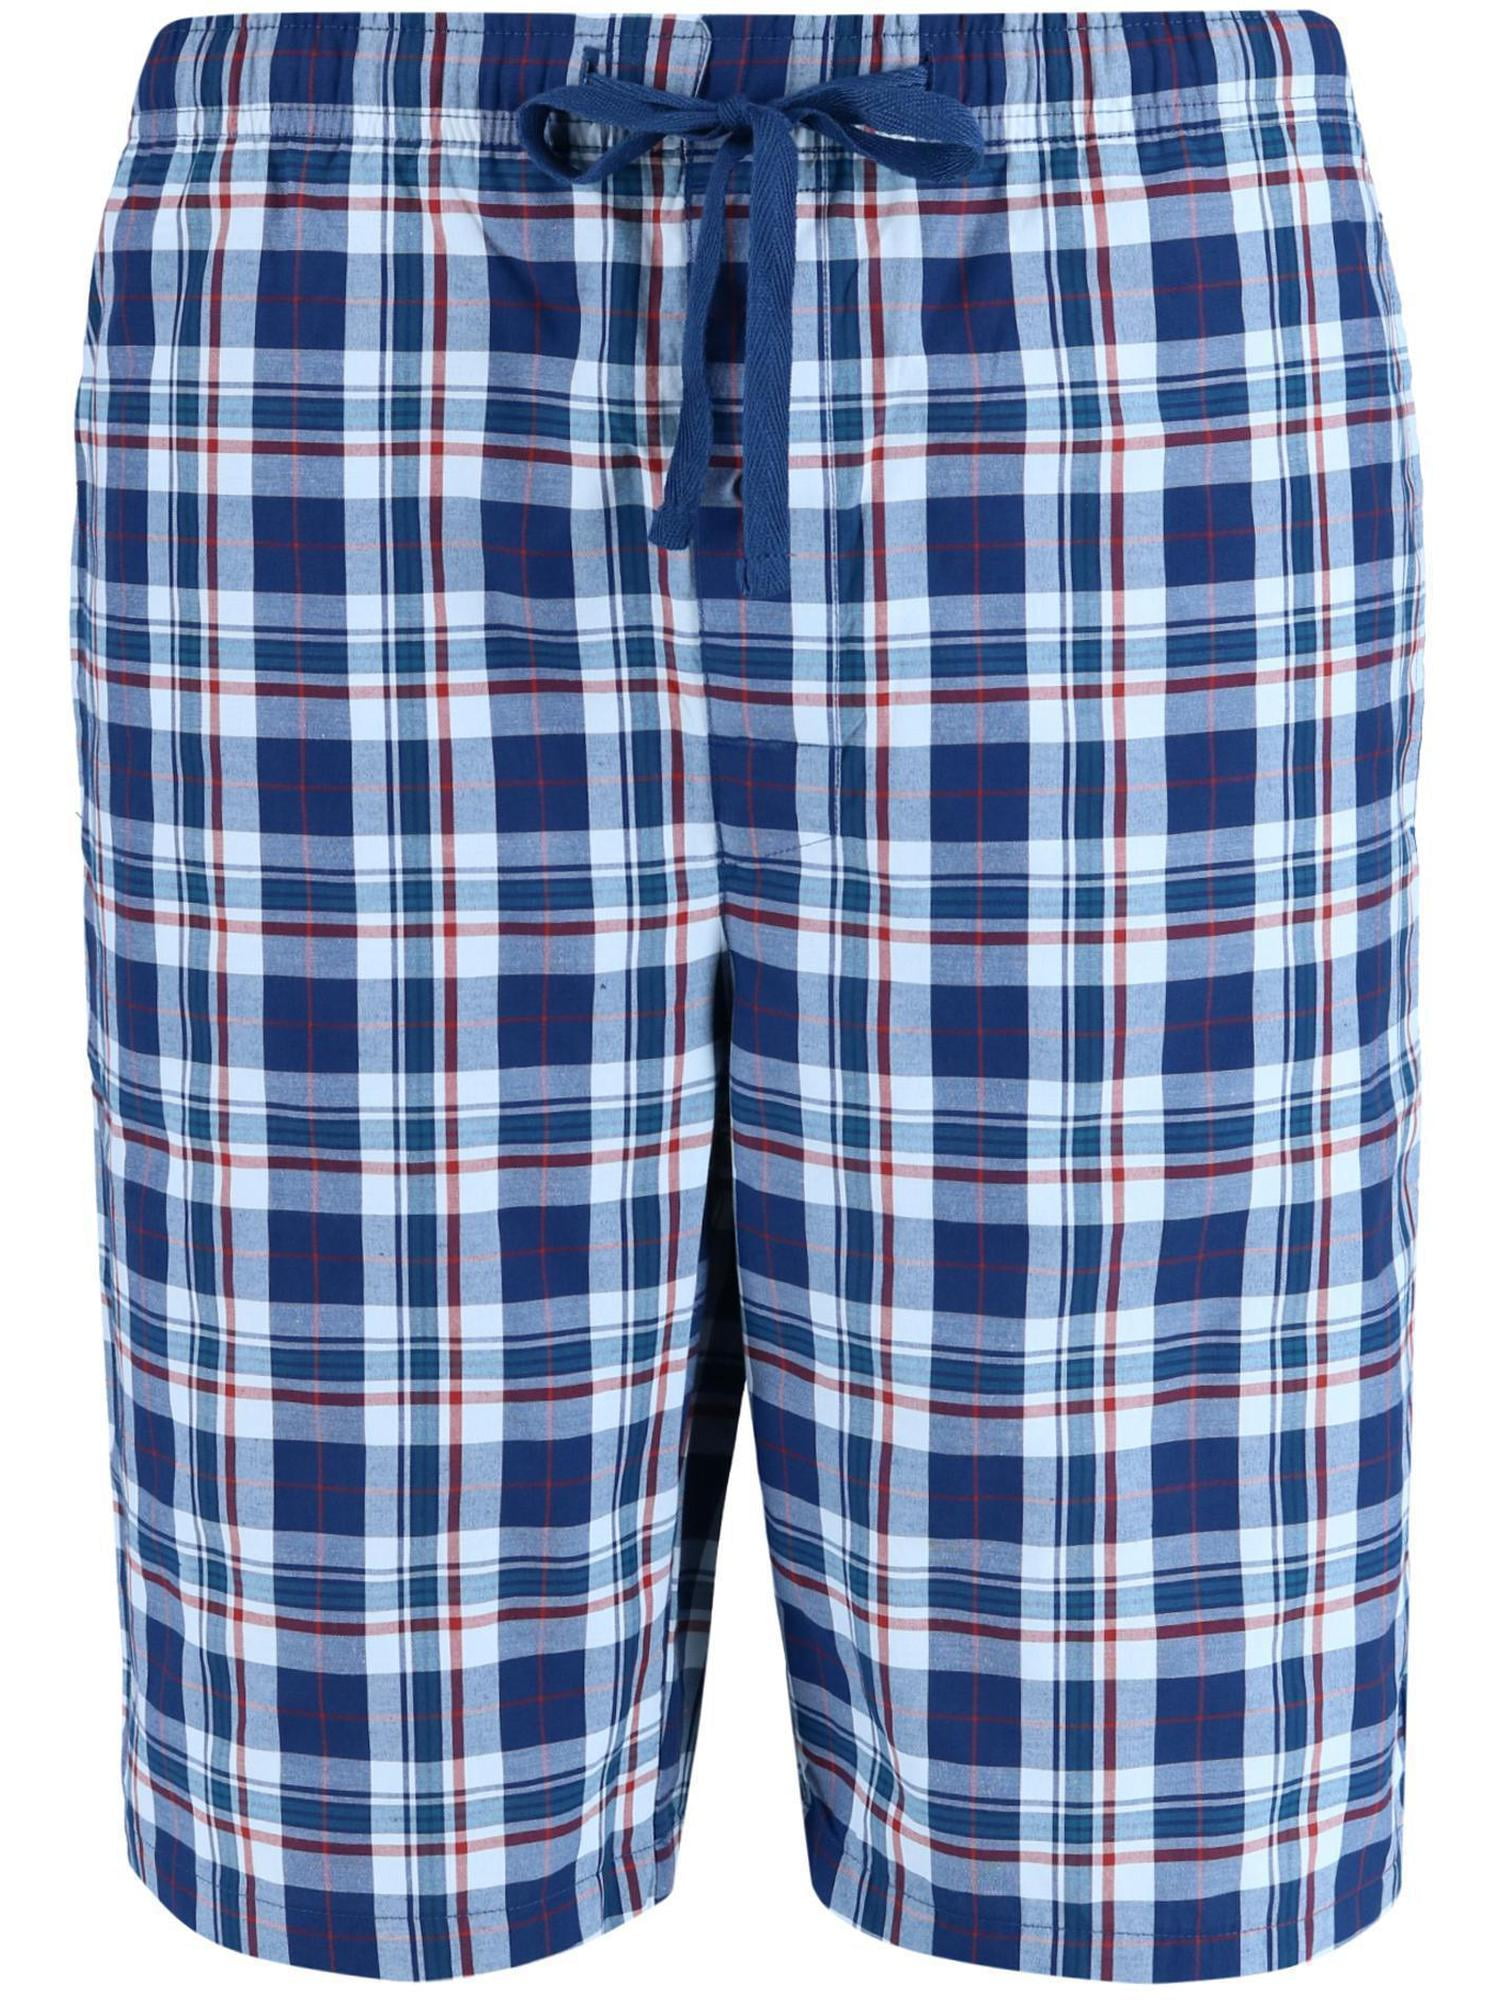 Hanes Cotton Madras Drawstring Sleep Pajama Shorts (Men) - Walmart.com